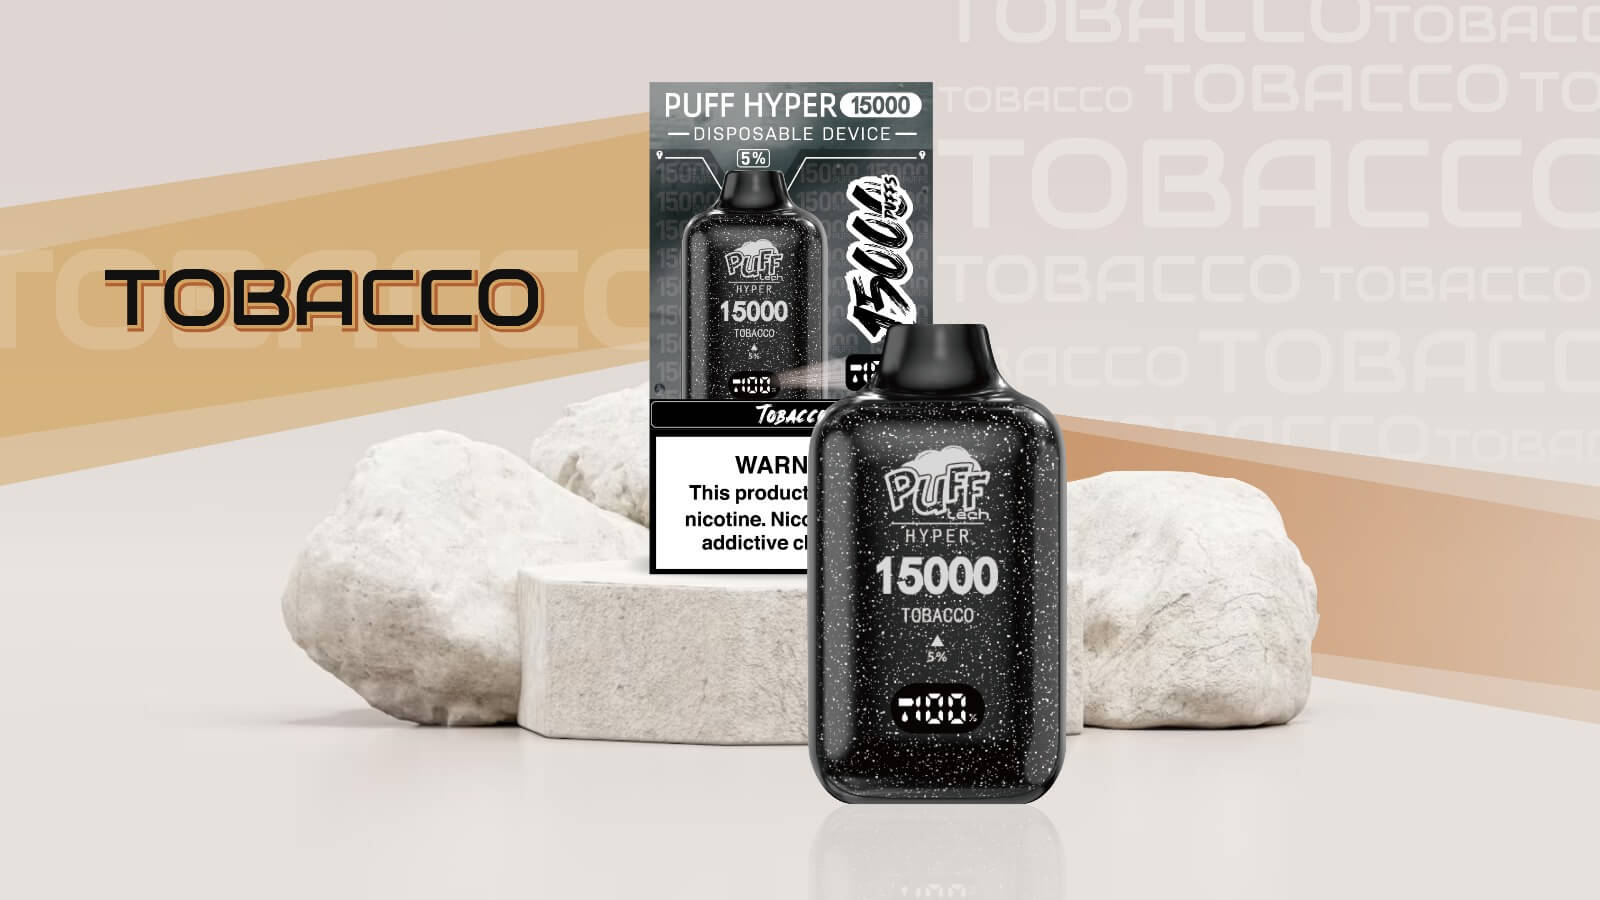 Pufftech Hyper 15000 Tobacco